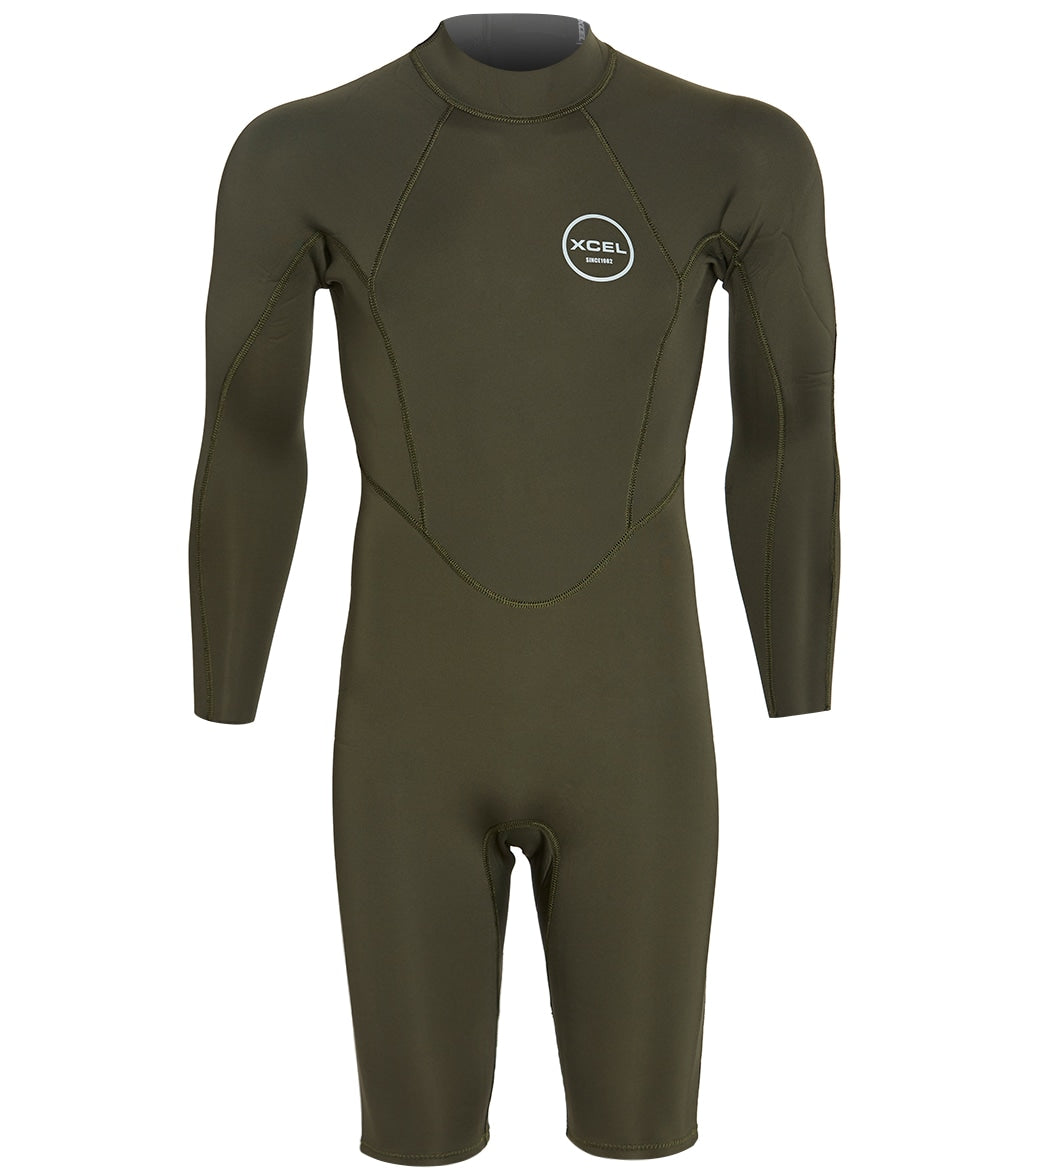 Xcel Men's 2MM Axis Long Sleeve Back Zip Spring Suit at SwimOutlet.com